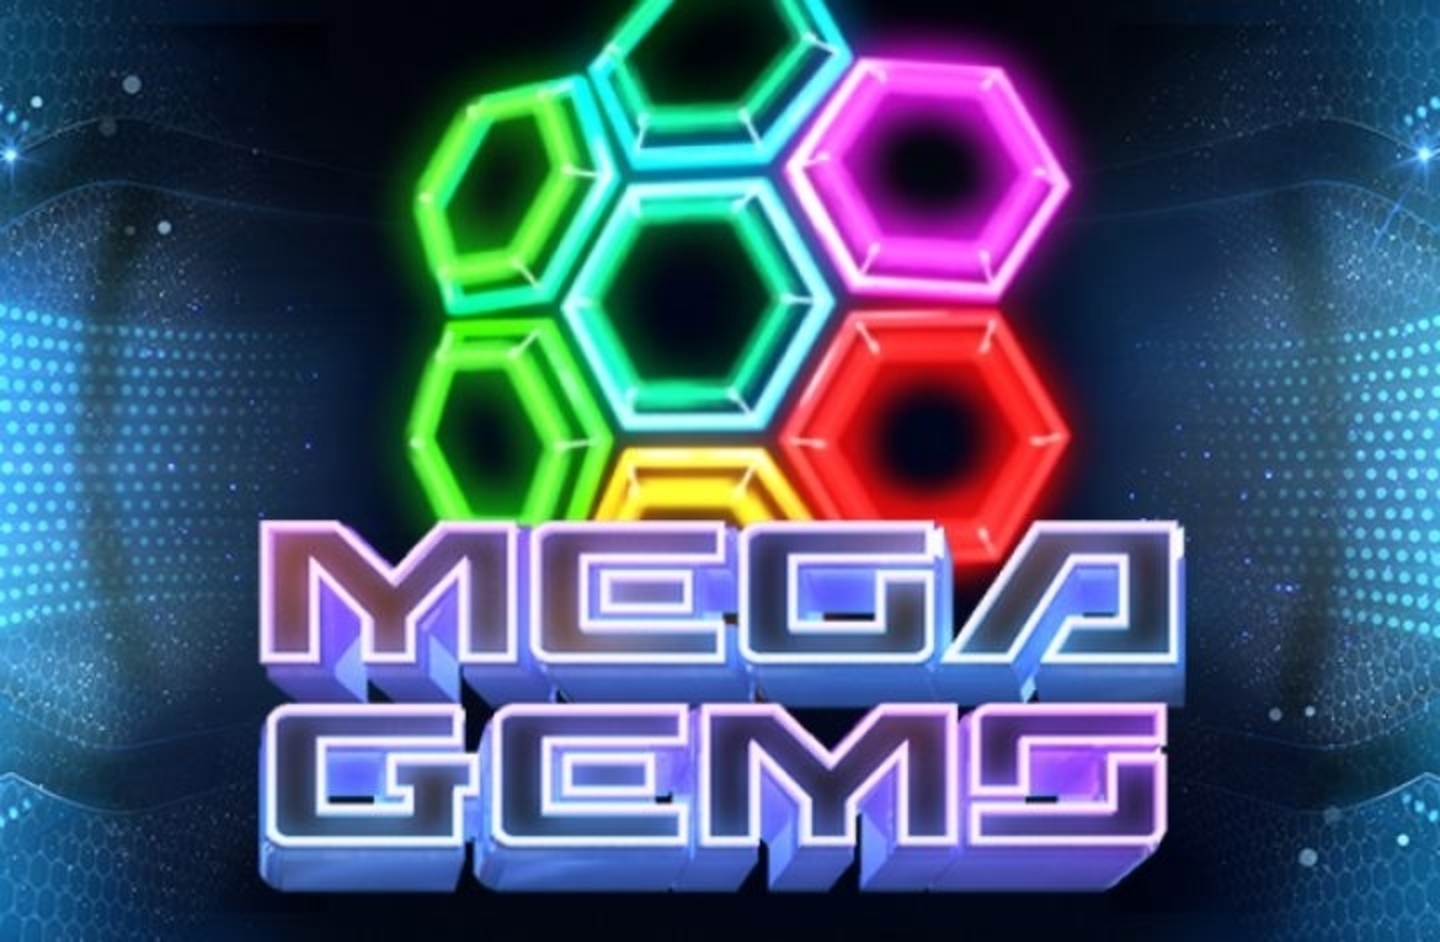 The Mega Gems Online Slot Demo Game by Betsoft